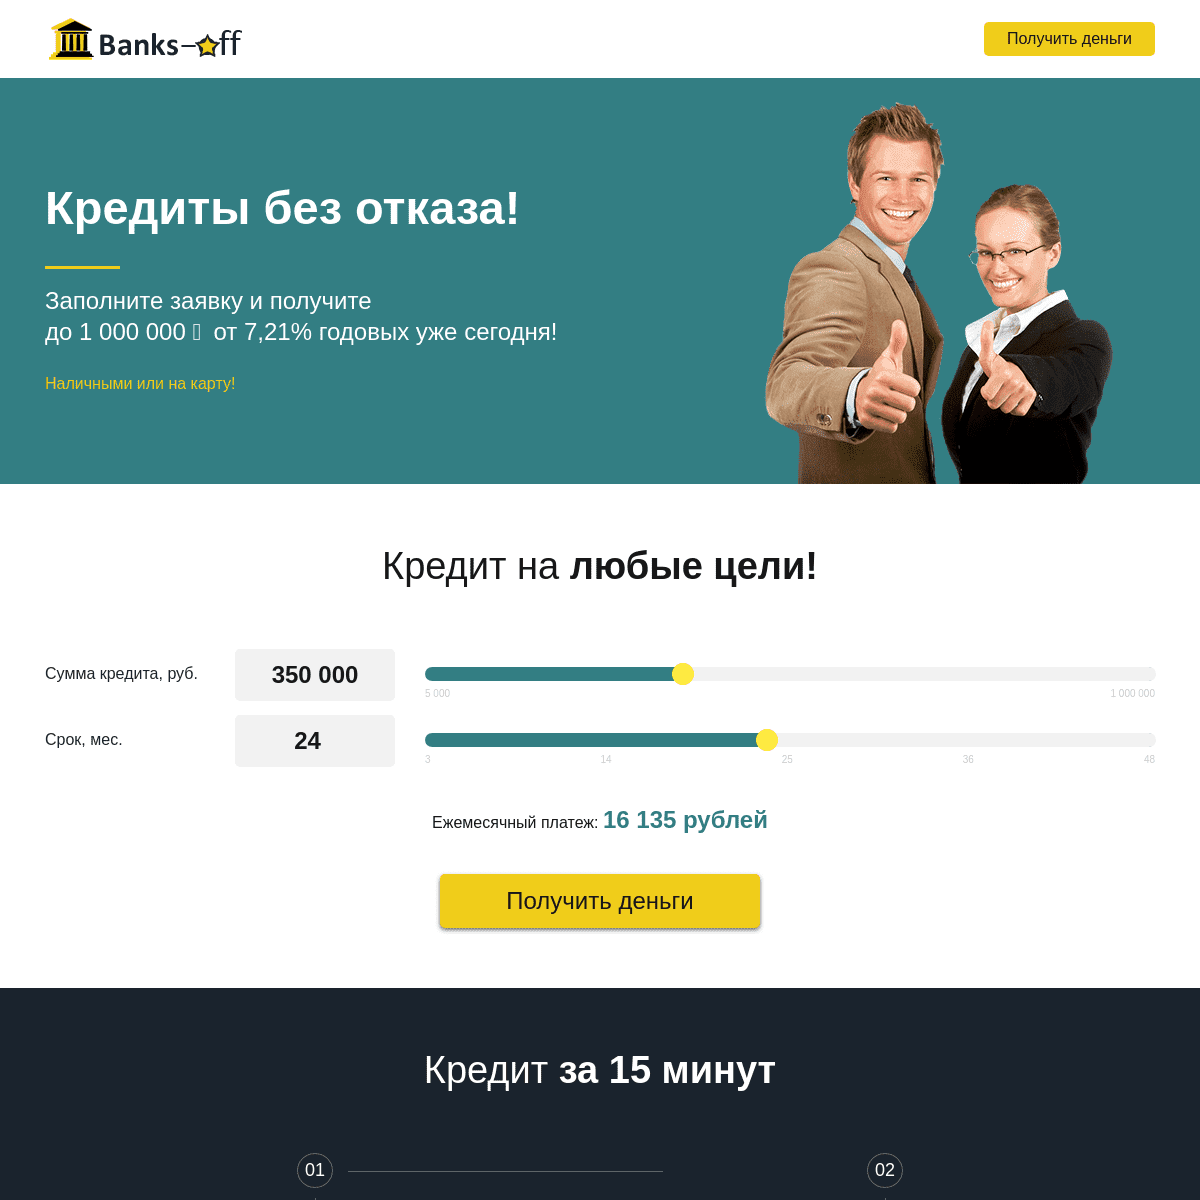 A complete backup of banks-off.ru